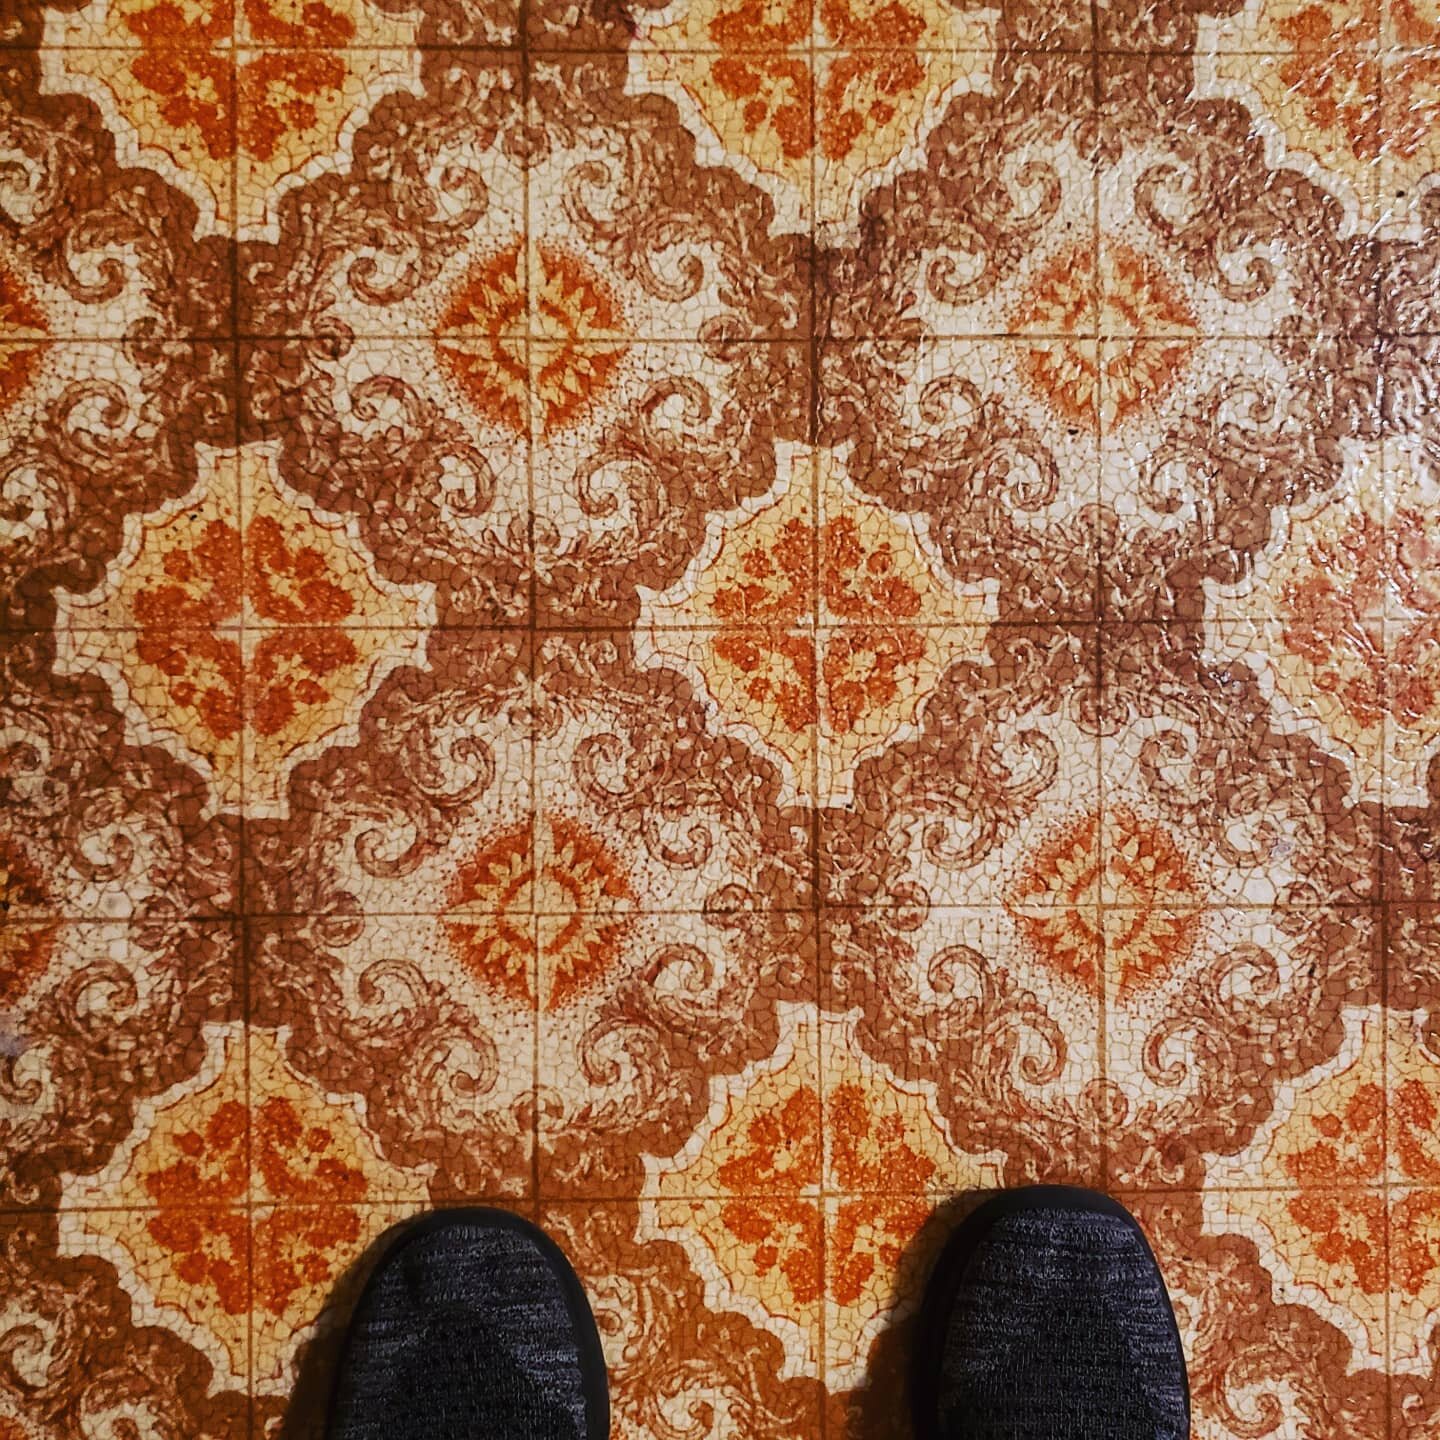 😍 I'm listening you funky ass vintage flooring. &quot;Keep me, love me, adore me.&quot; -- Got it! 😉🤩
.
.
.
#vintage #periodflooring #vintagefloor #oldhousestuff #charm #character #funky #patterns #youcantbuythatanymore #keepit #orange #vinyl #vin